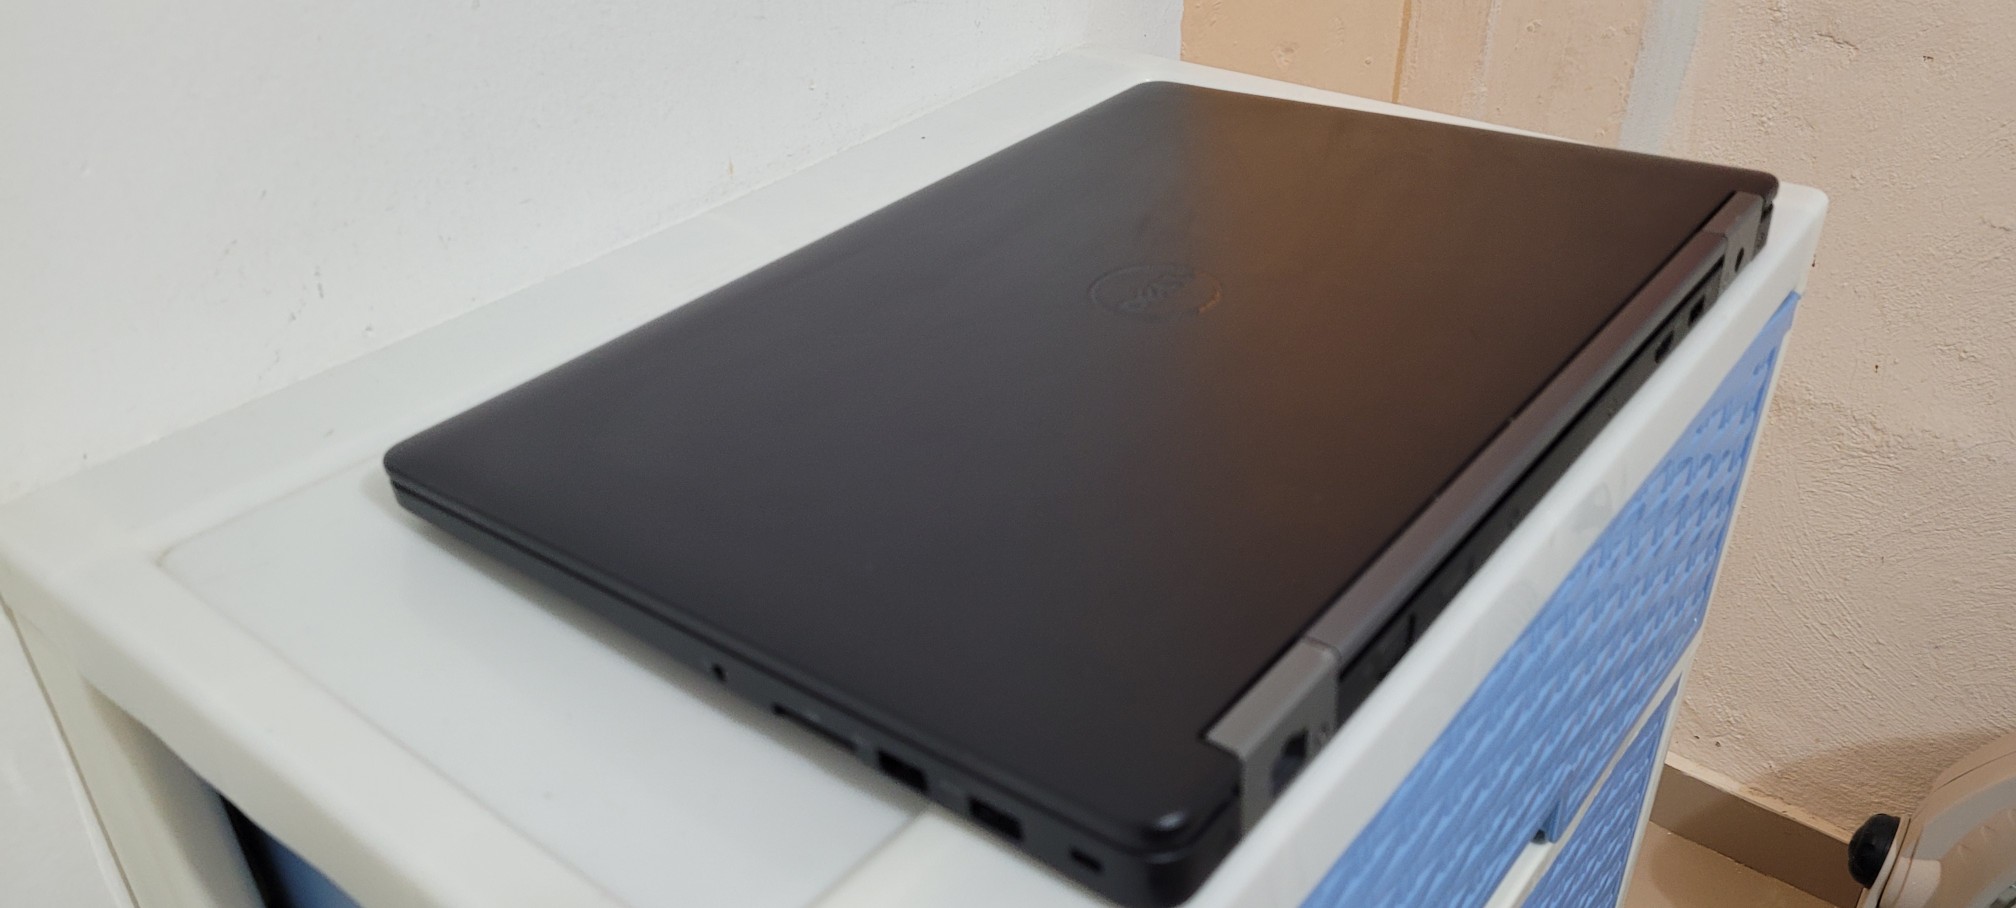 computadoras y laptops - Dell 7480 14 Pulg Core i5 7ma Gen Ram 8gb ddr4 Disco 128gb SSD Solido hdmi 2